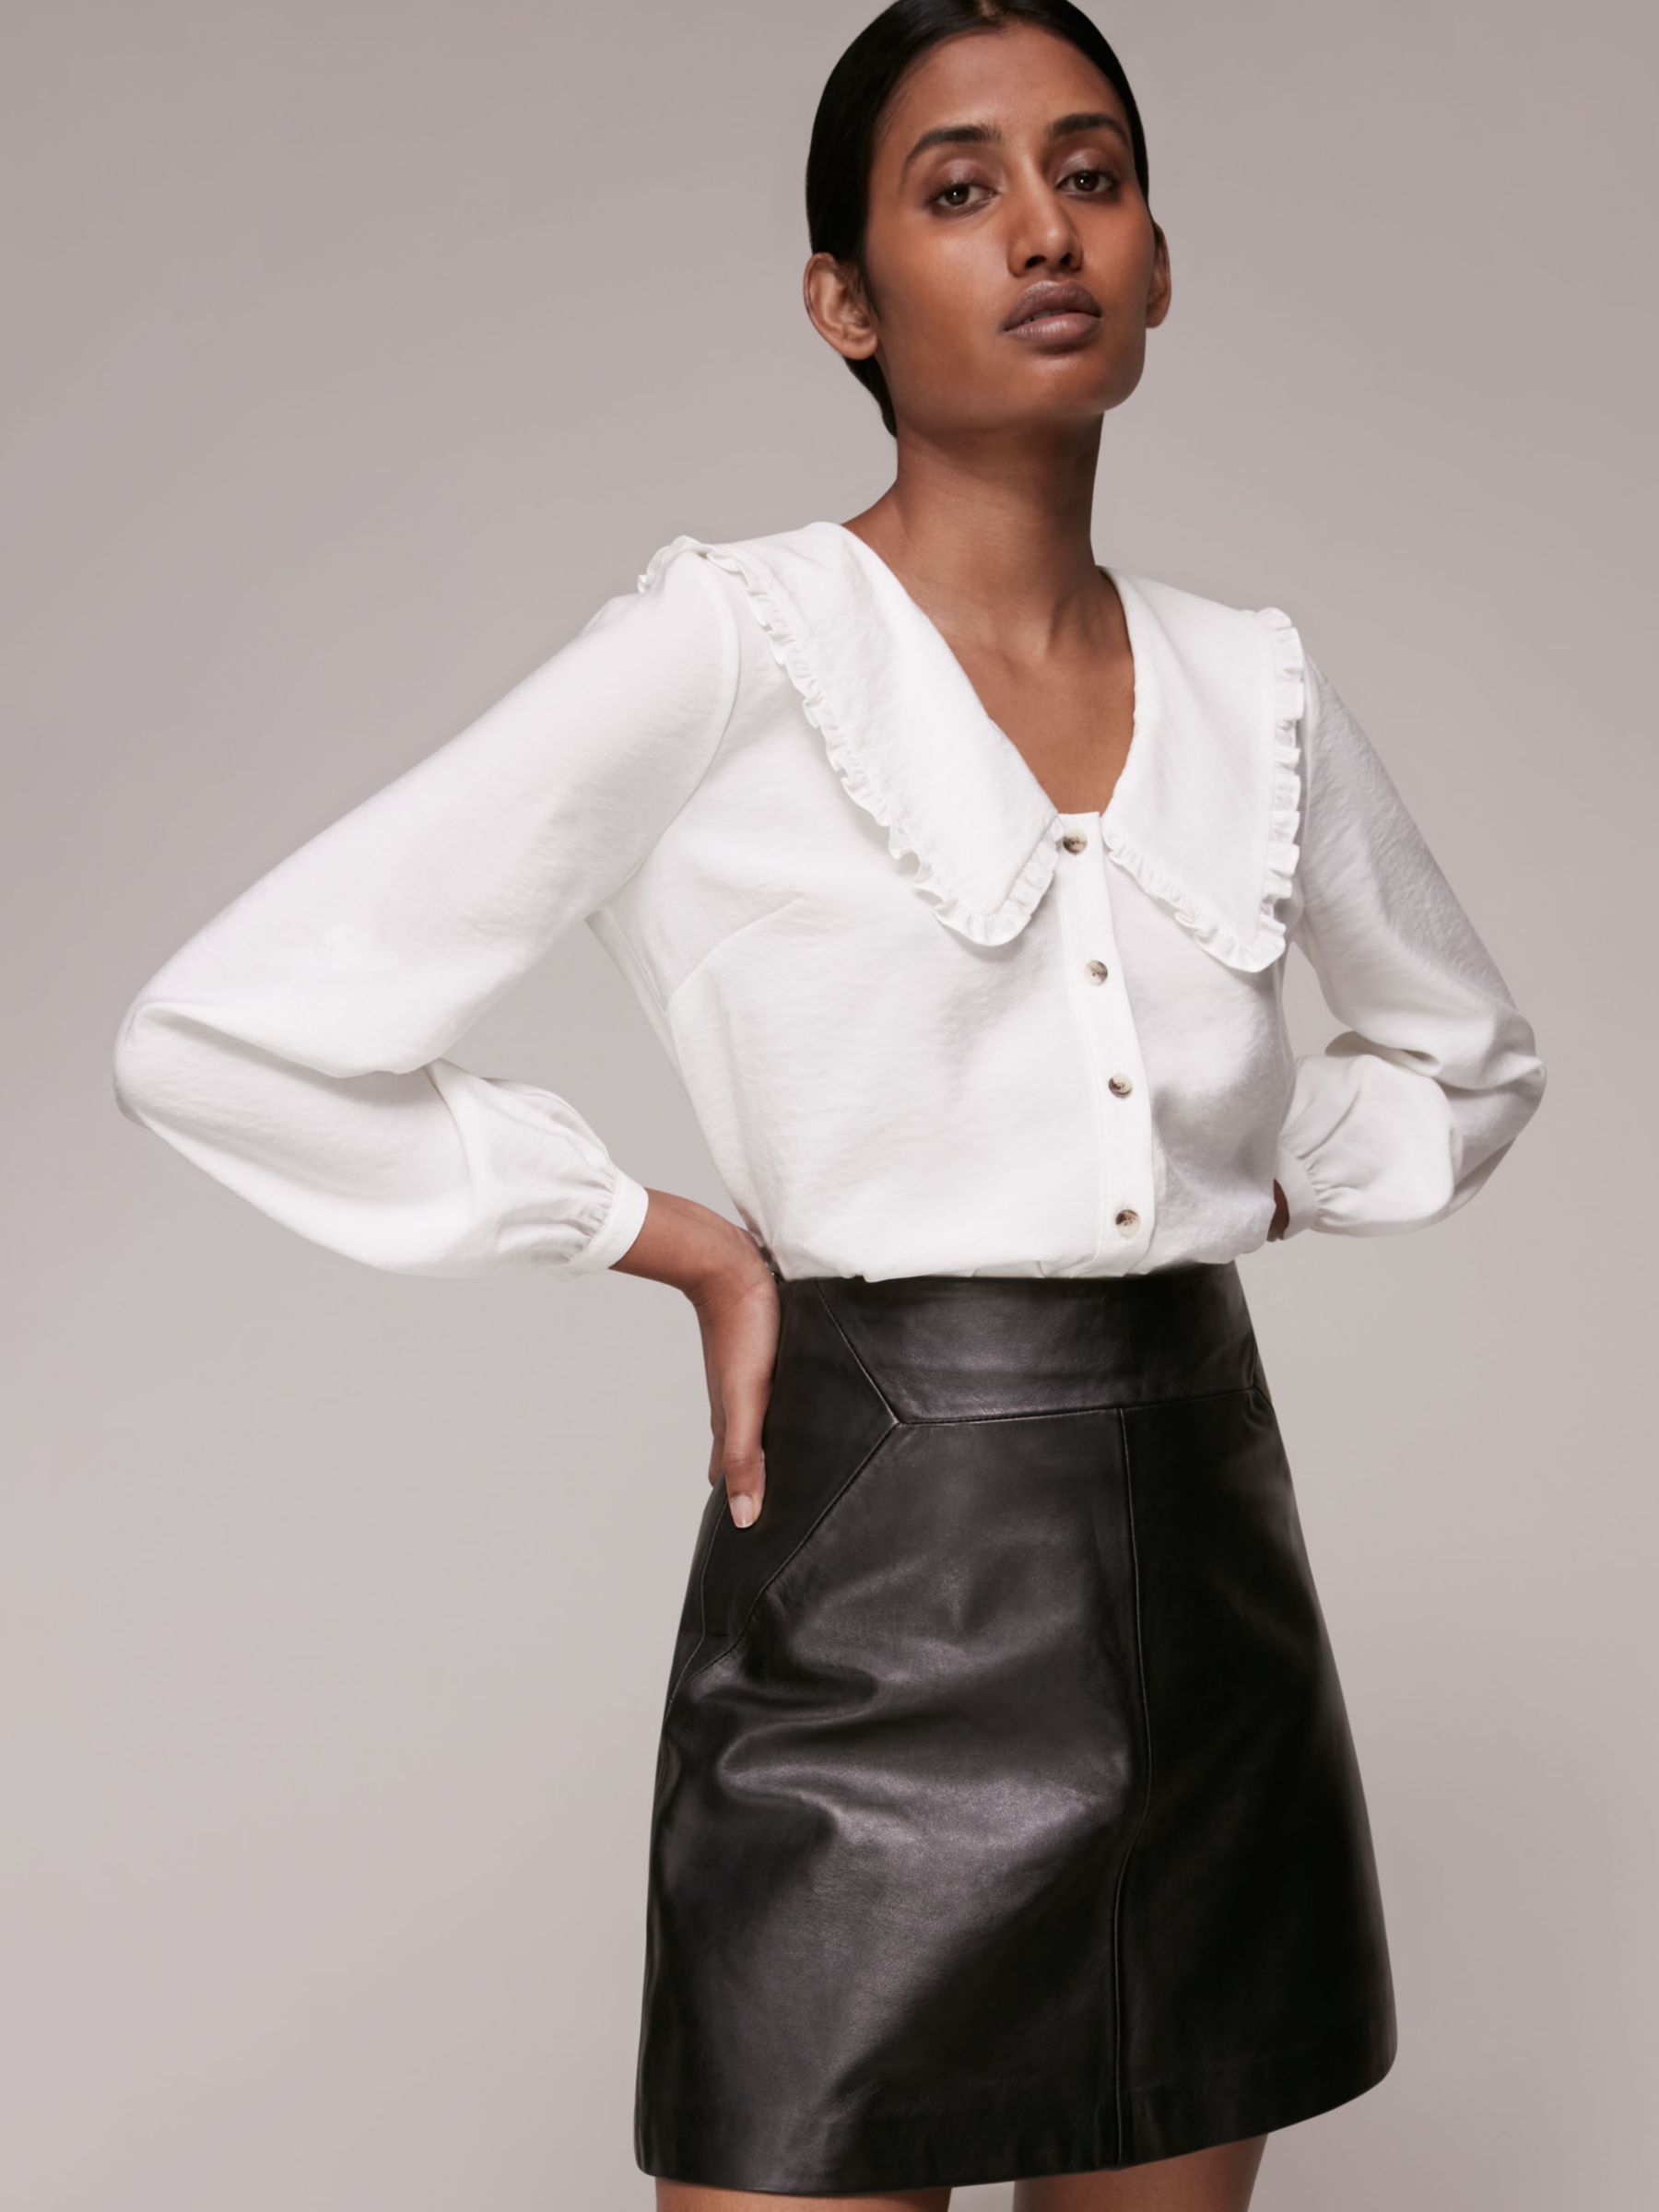 Black Leather A-Line Mini Skirt, Whistles UK